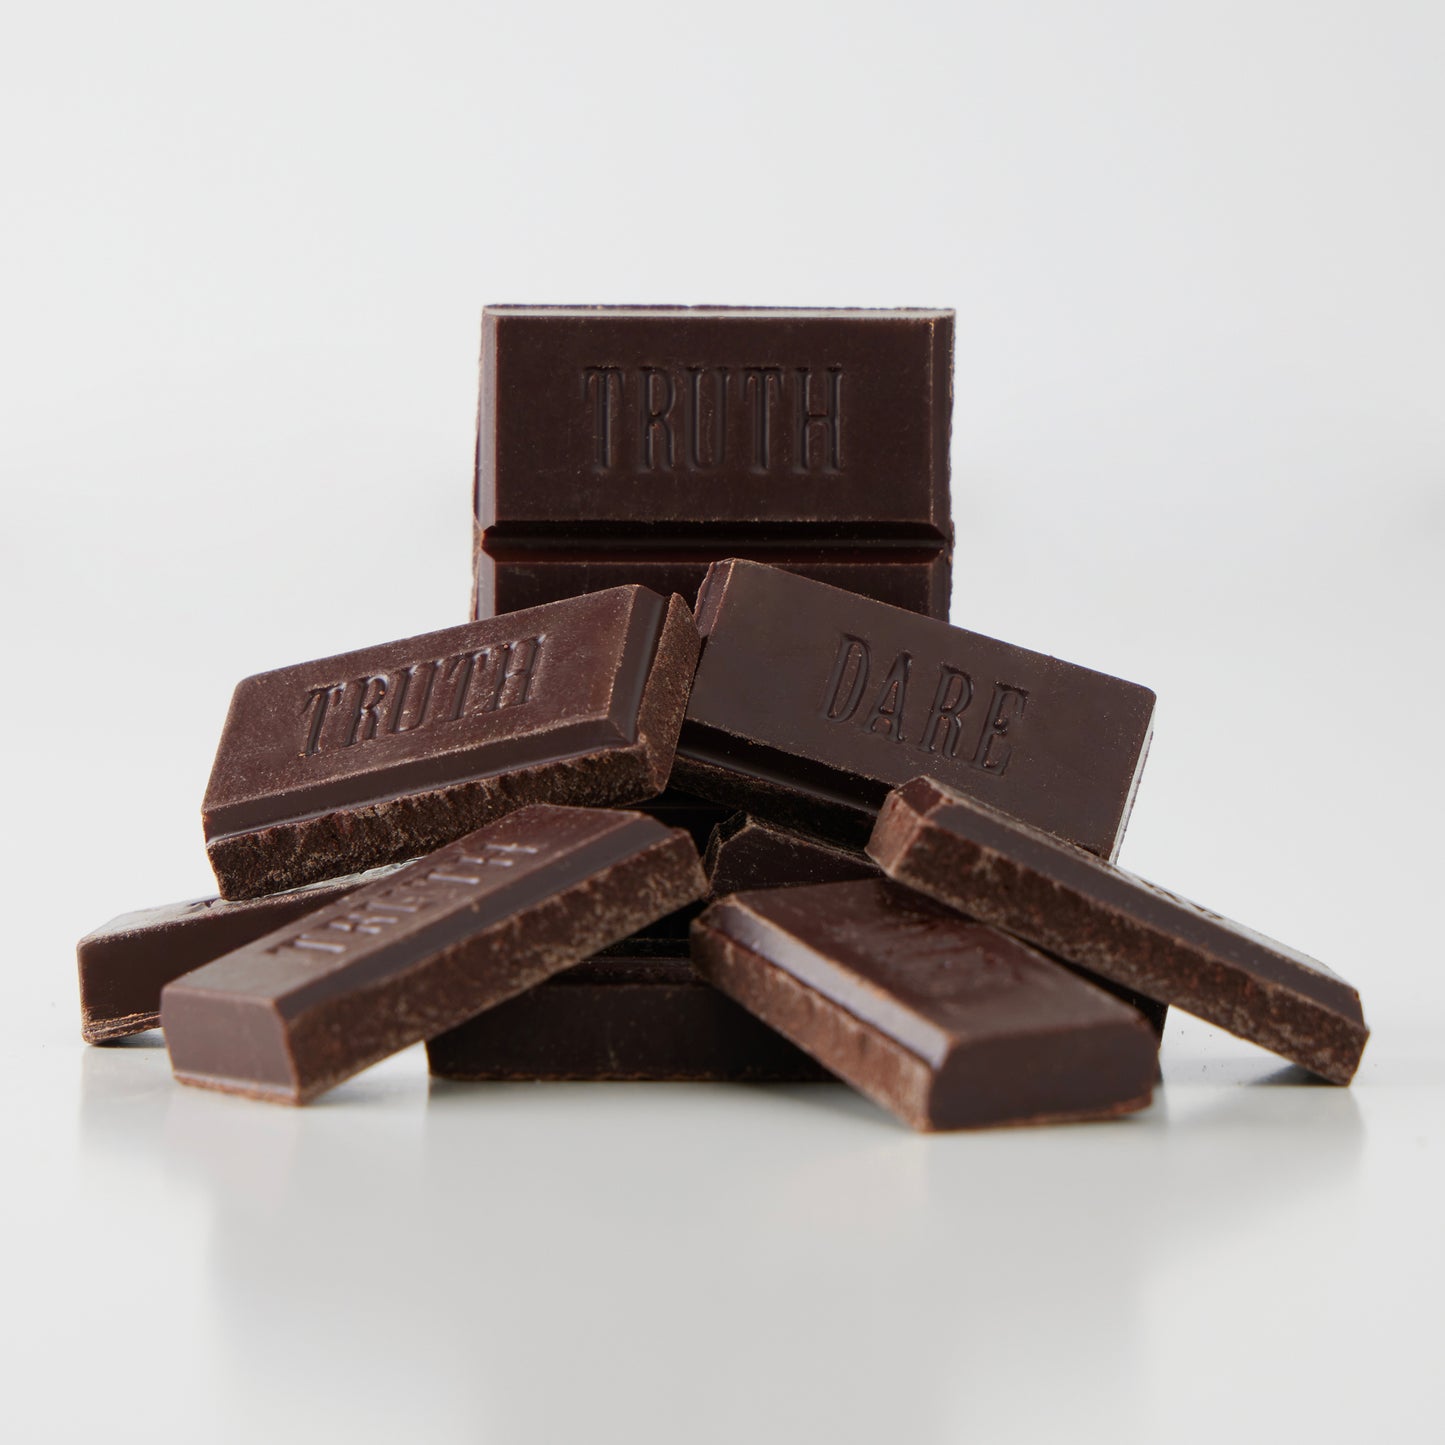 Pure 70% Dark Chocolate 1.75oz. (50 g)